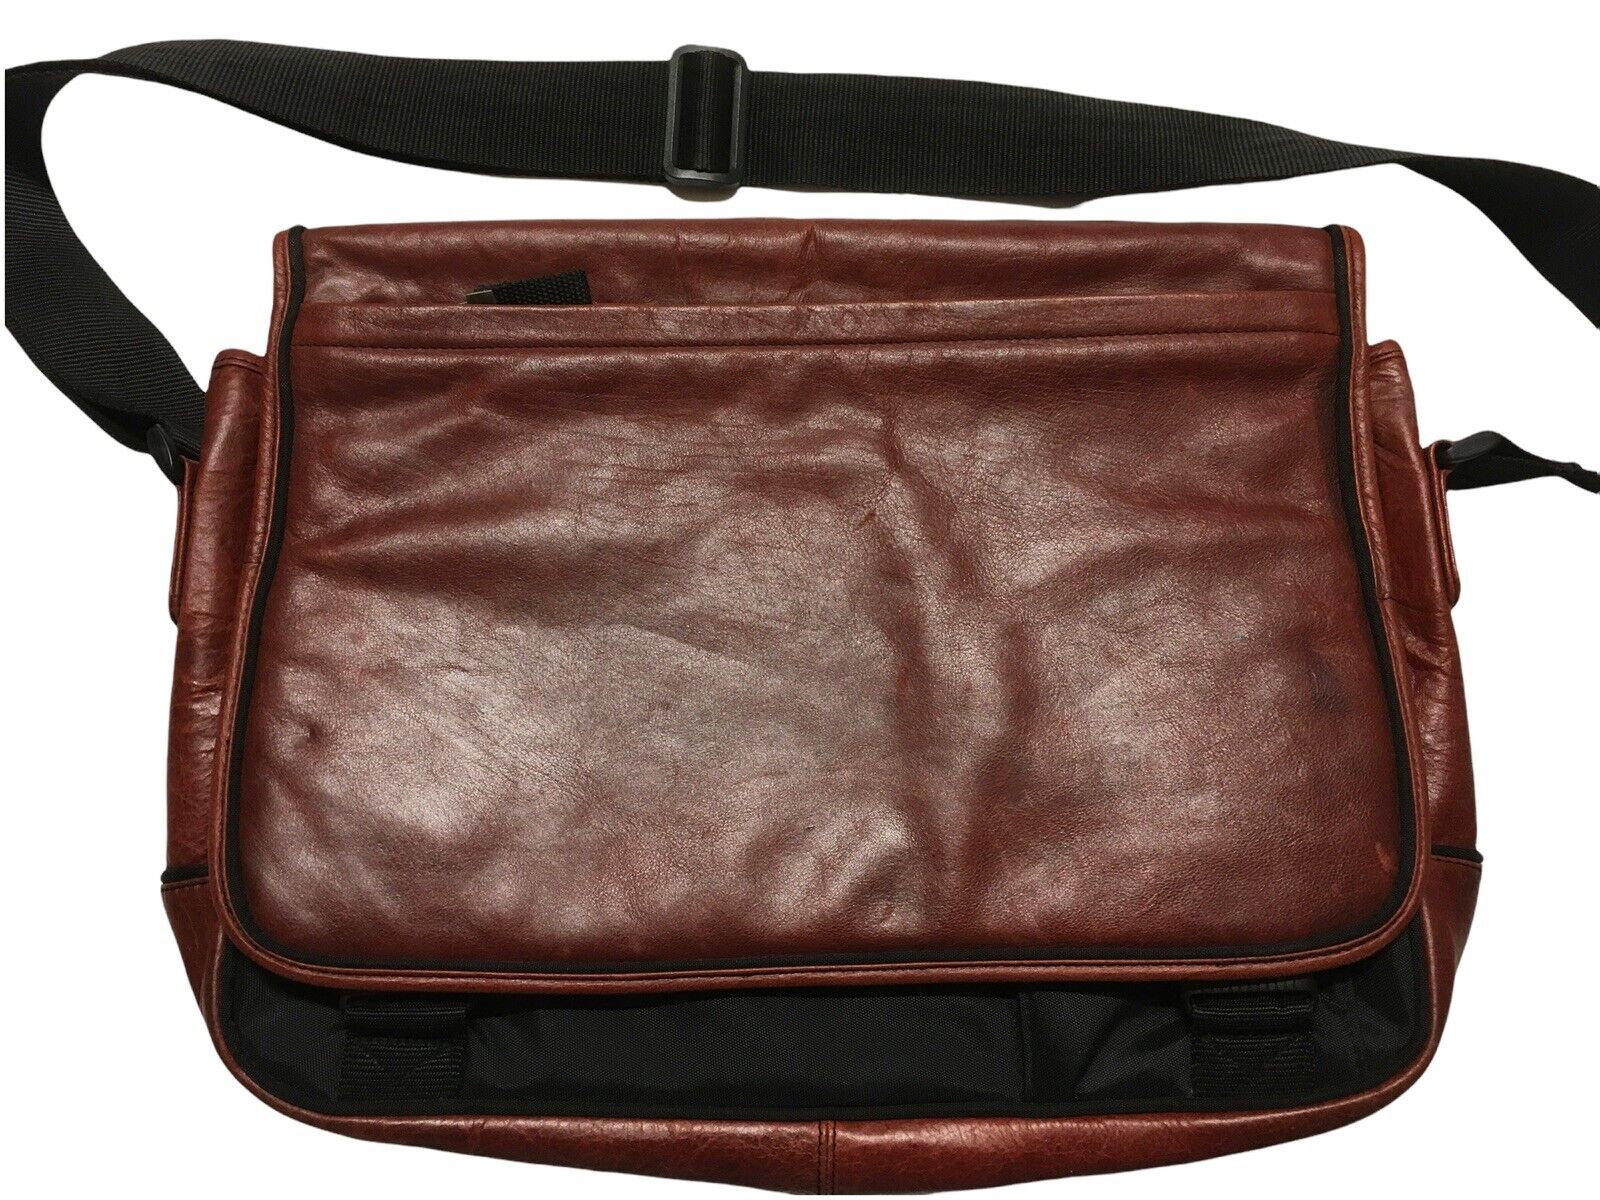 WILSONS LEATHER Reddish Brown Laptop Messenger Bag Briefcase